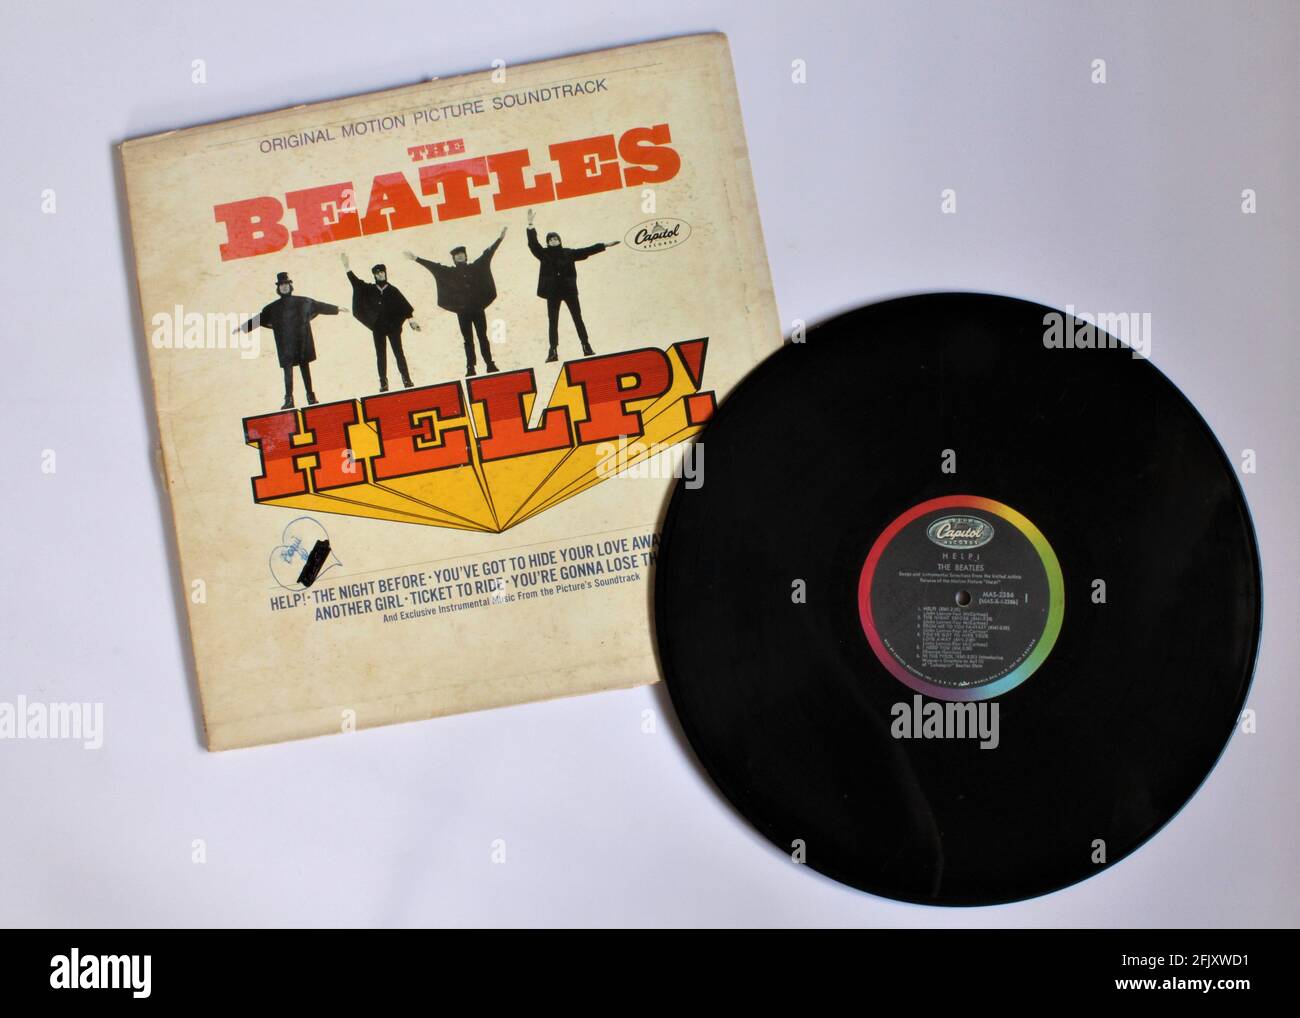 The Beatles Original Motion Picture Soundtrack Hilfe! Musikalbum auf Vinyl-Schallplatte. Englische Rockmusik. Stockfoto